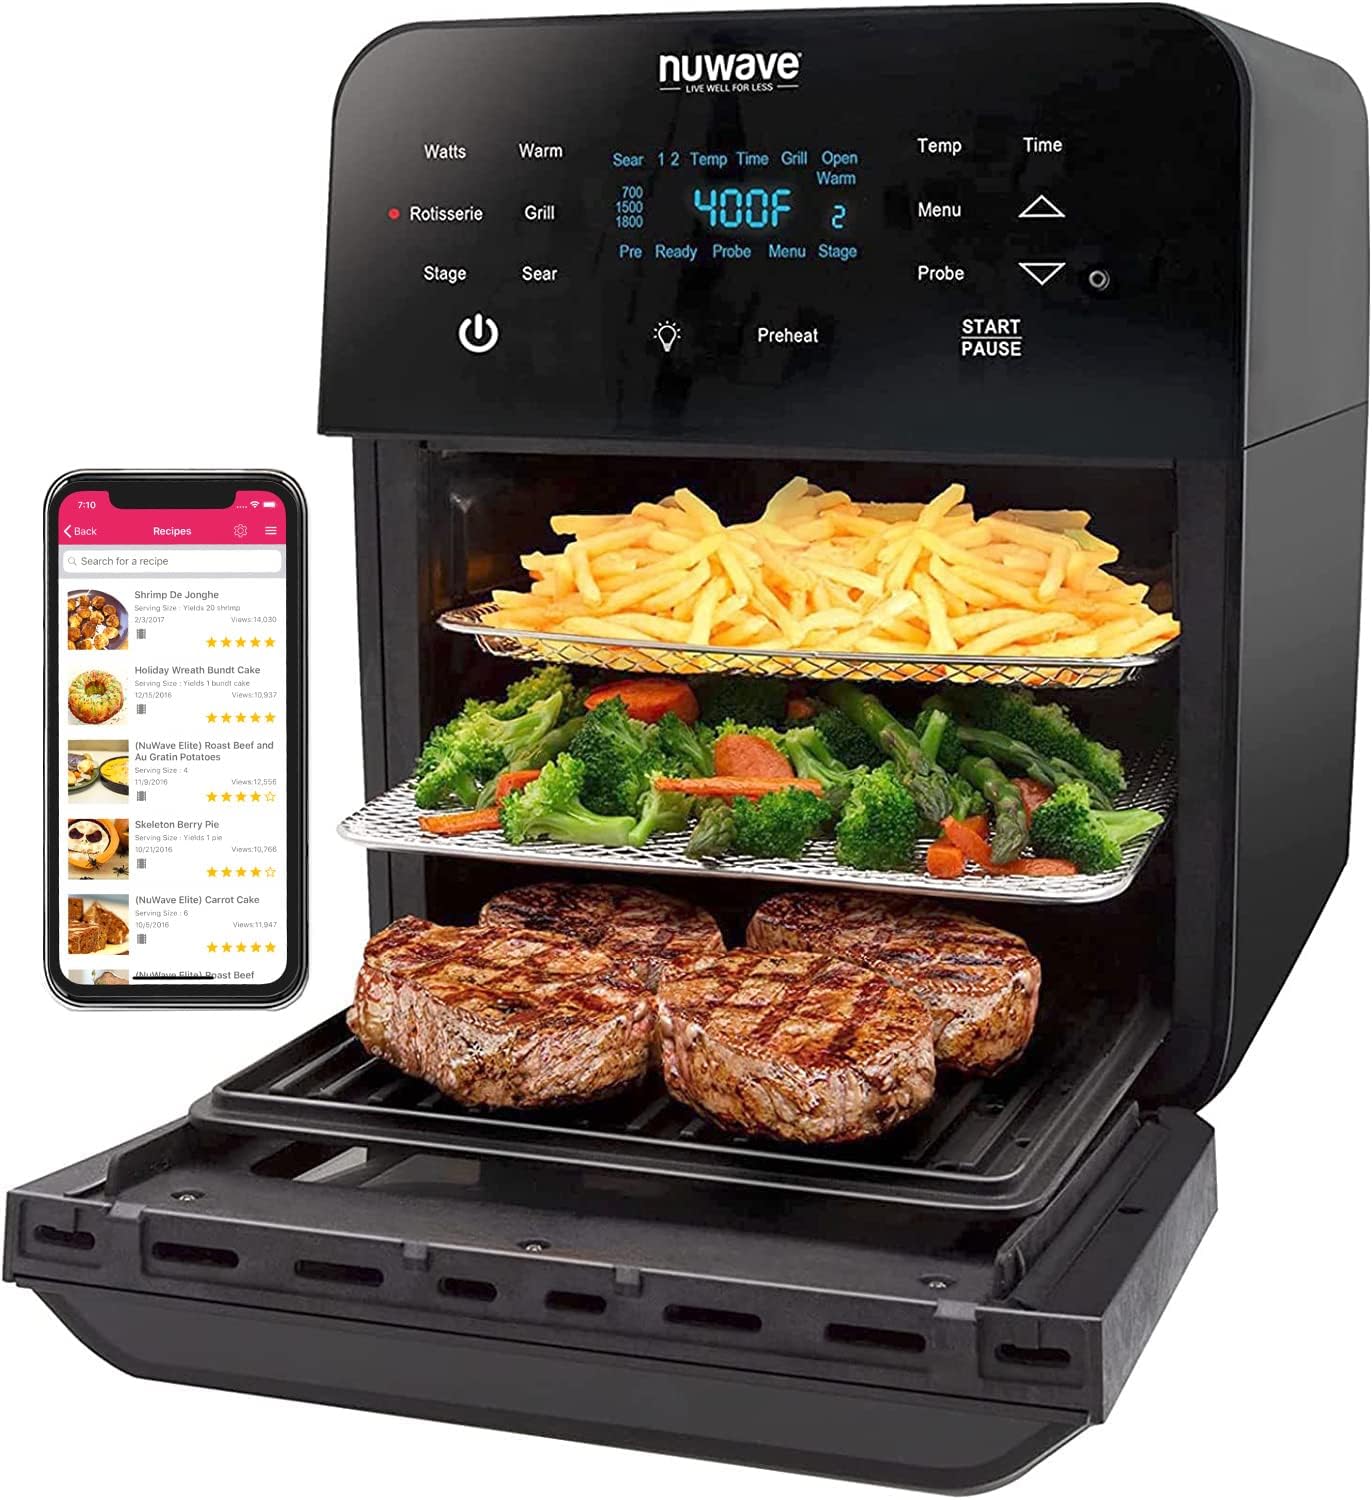 Nuwave Brio 15.5Qt Air Fryer Rotisserie Oven, X-Large Family Size - $110